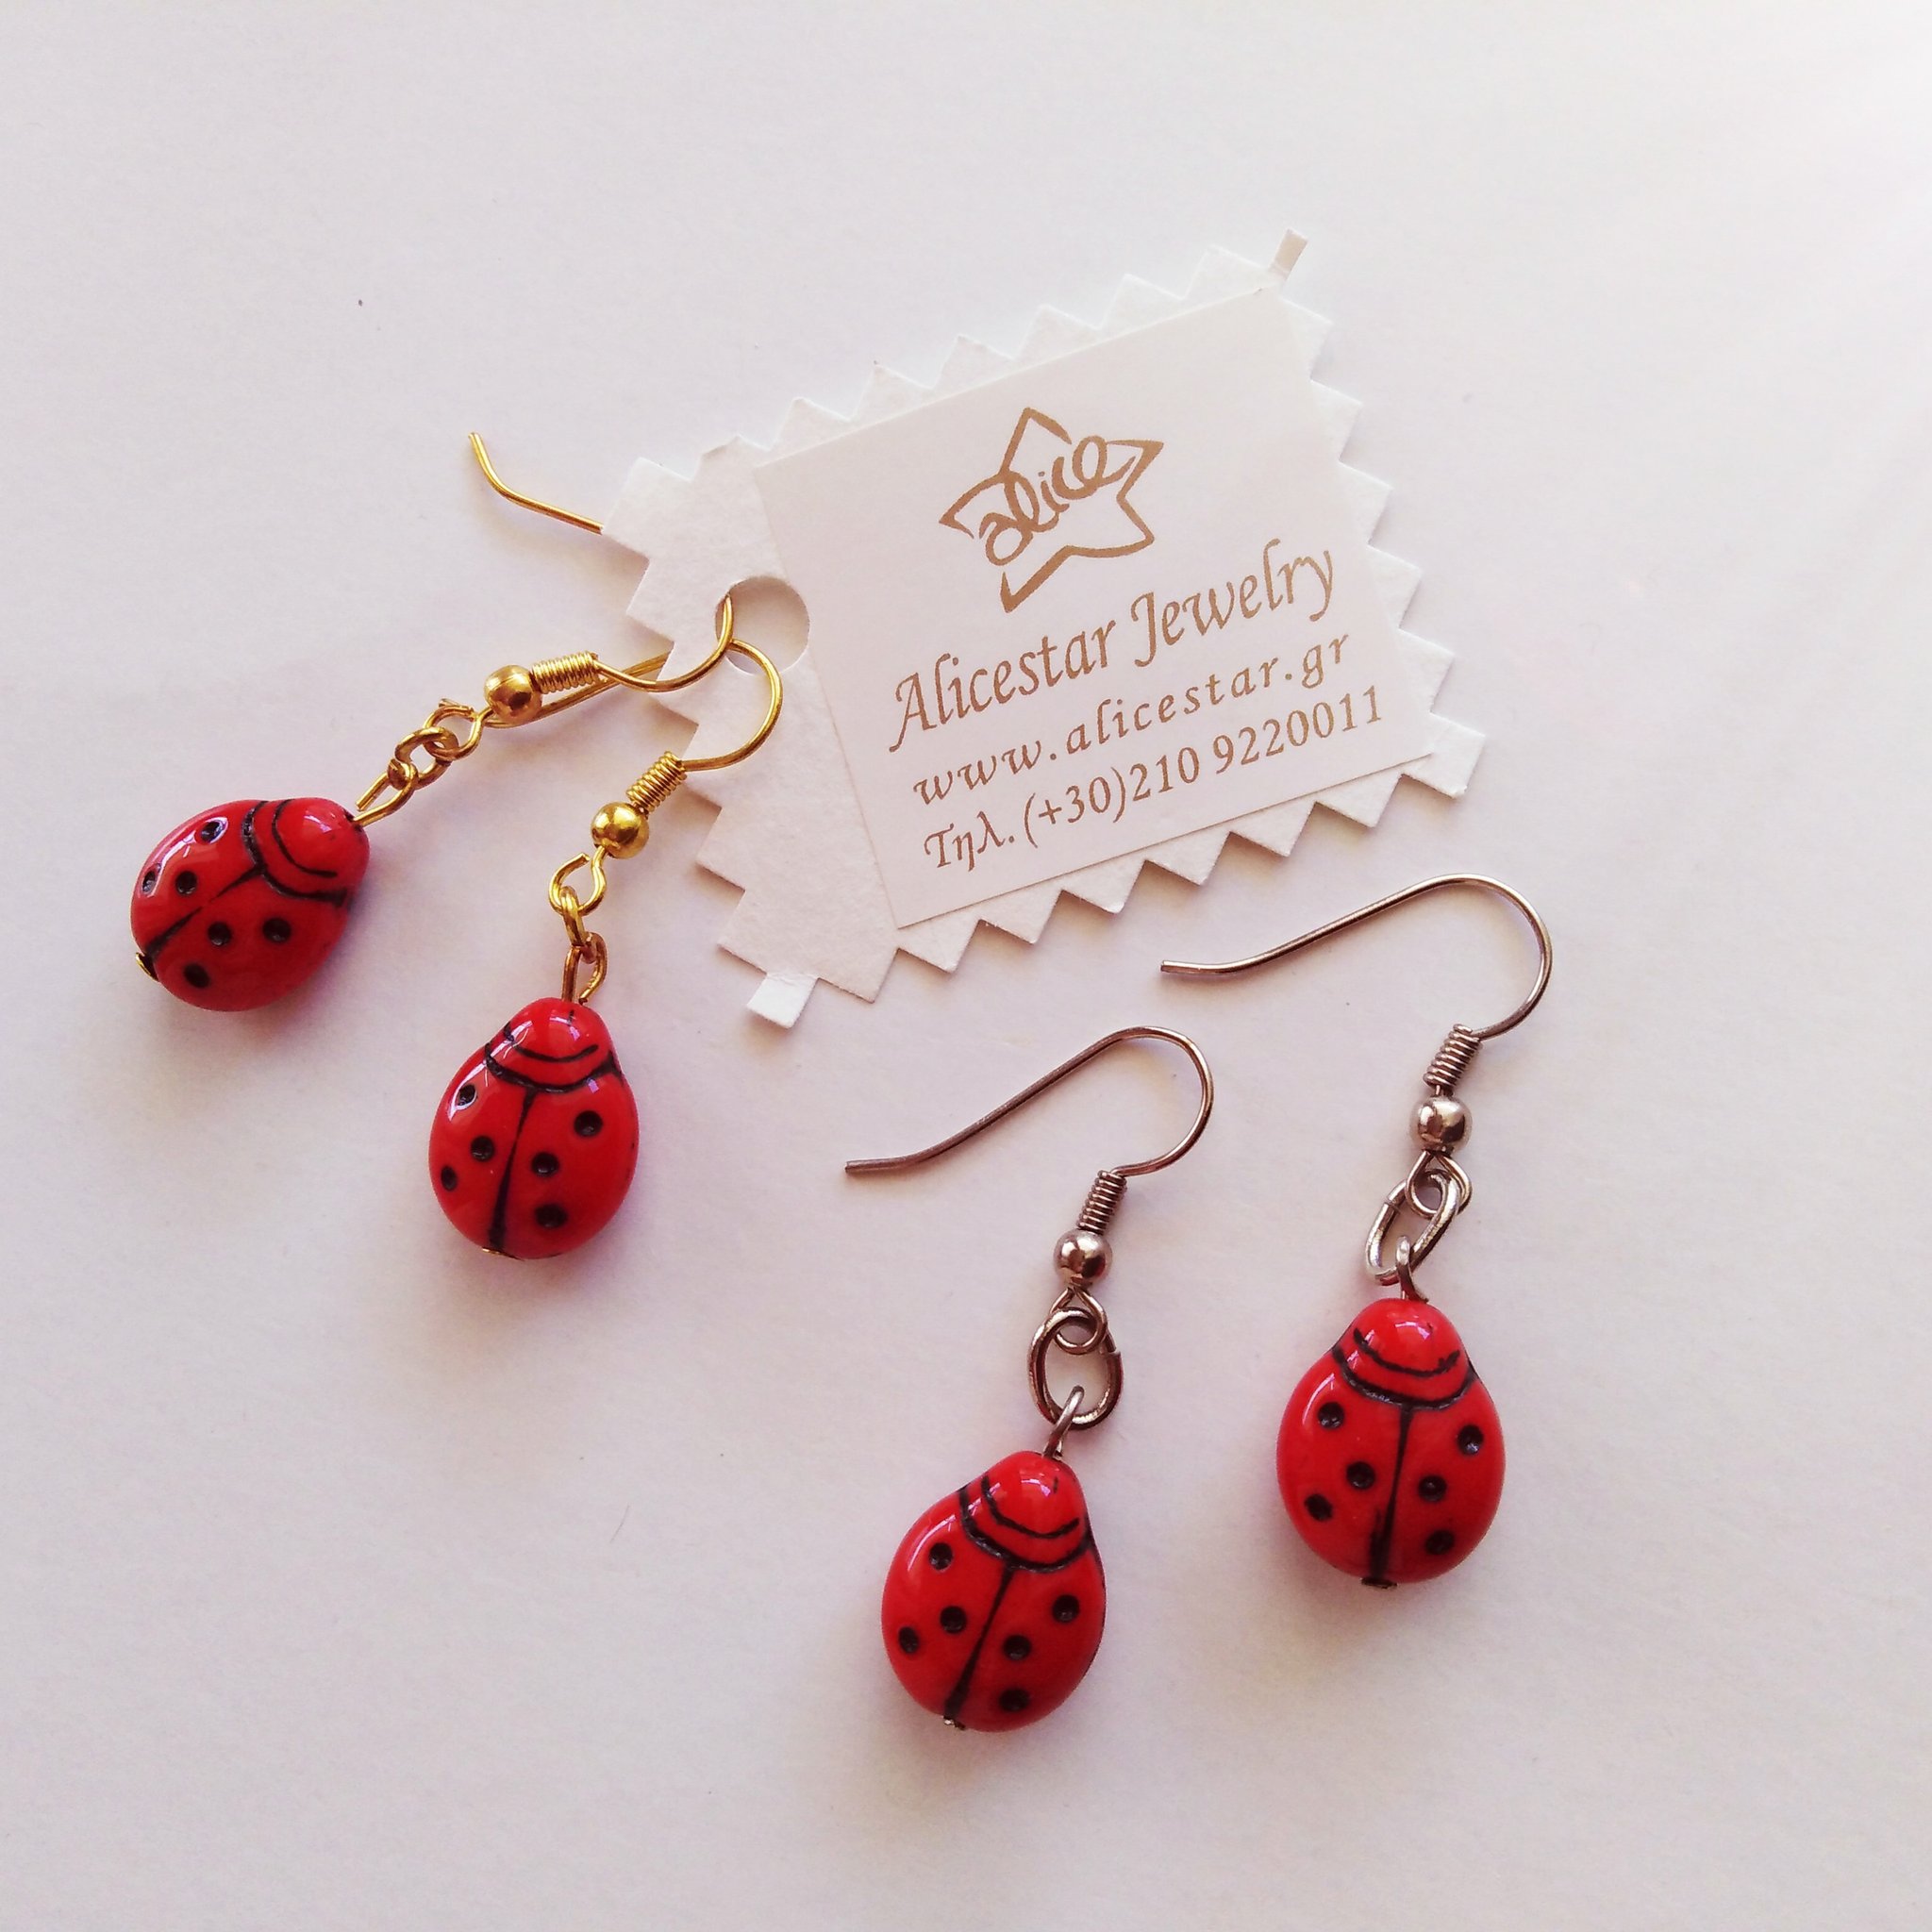 Alicestar Jewelry on X: "🐞Πασχαλίτσα🐞Ladybug🐞 #πασχαλιτσα #σκουλαρικια  #ladybug #Earrings #earringsoftheday #easter #πασχα #πασχαλινα #πασχαλινο  #δωρο #handmade by #Alicestarjewelry #Athens #greece #love #orderonline  https://t.co/PHJY64kxwY" / X